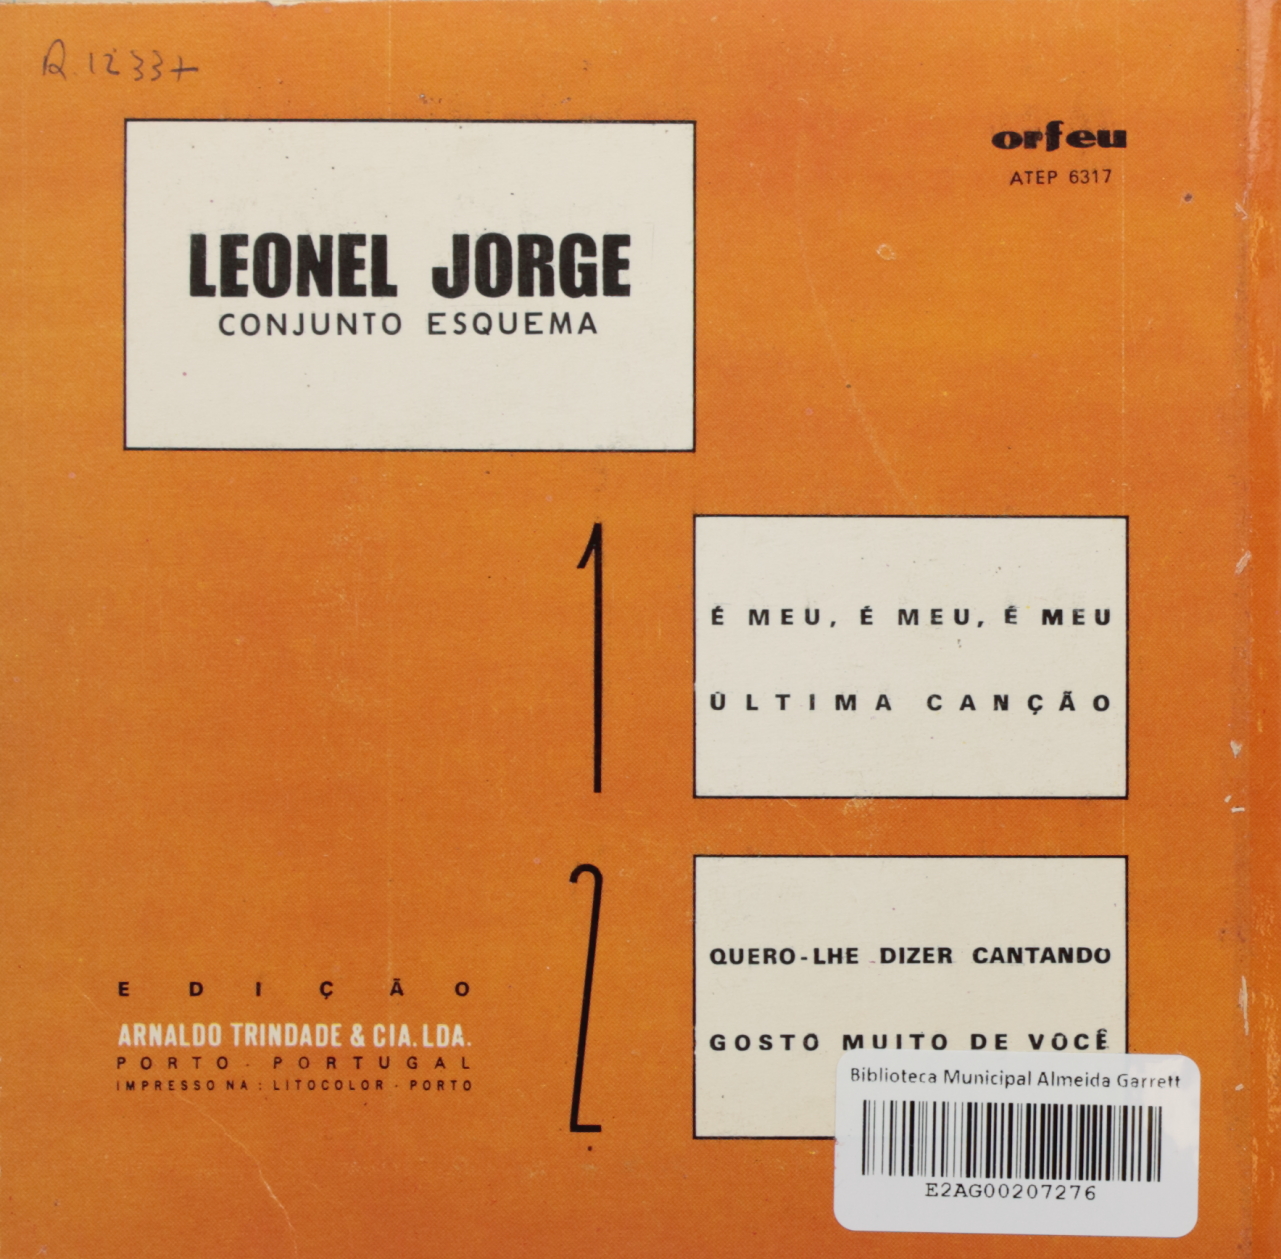 Leonel Jorge